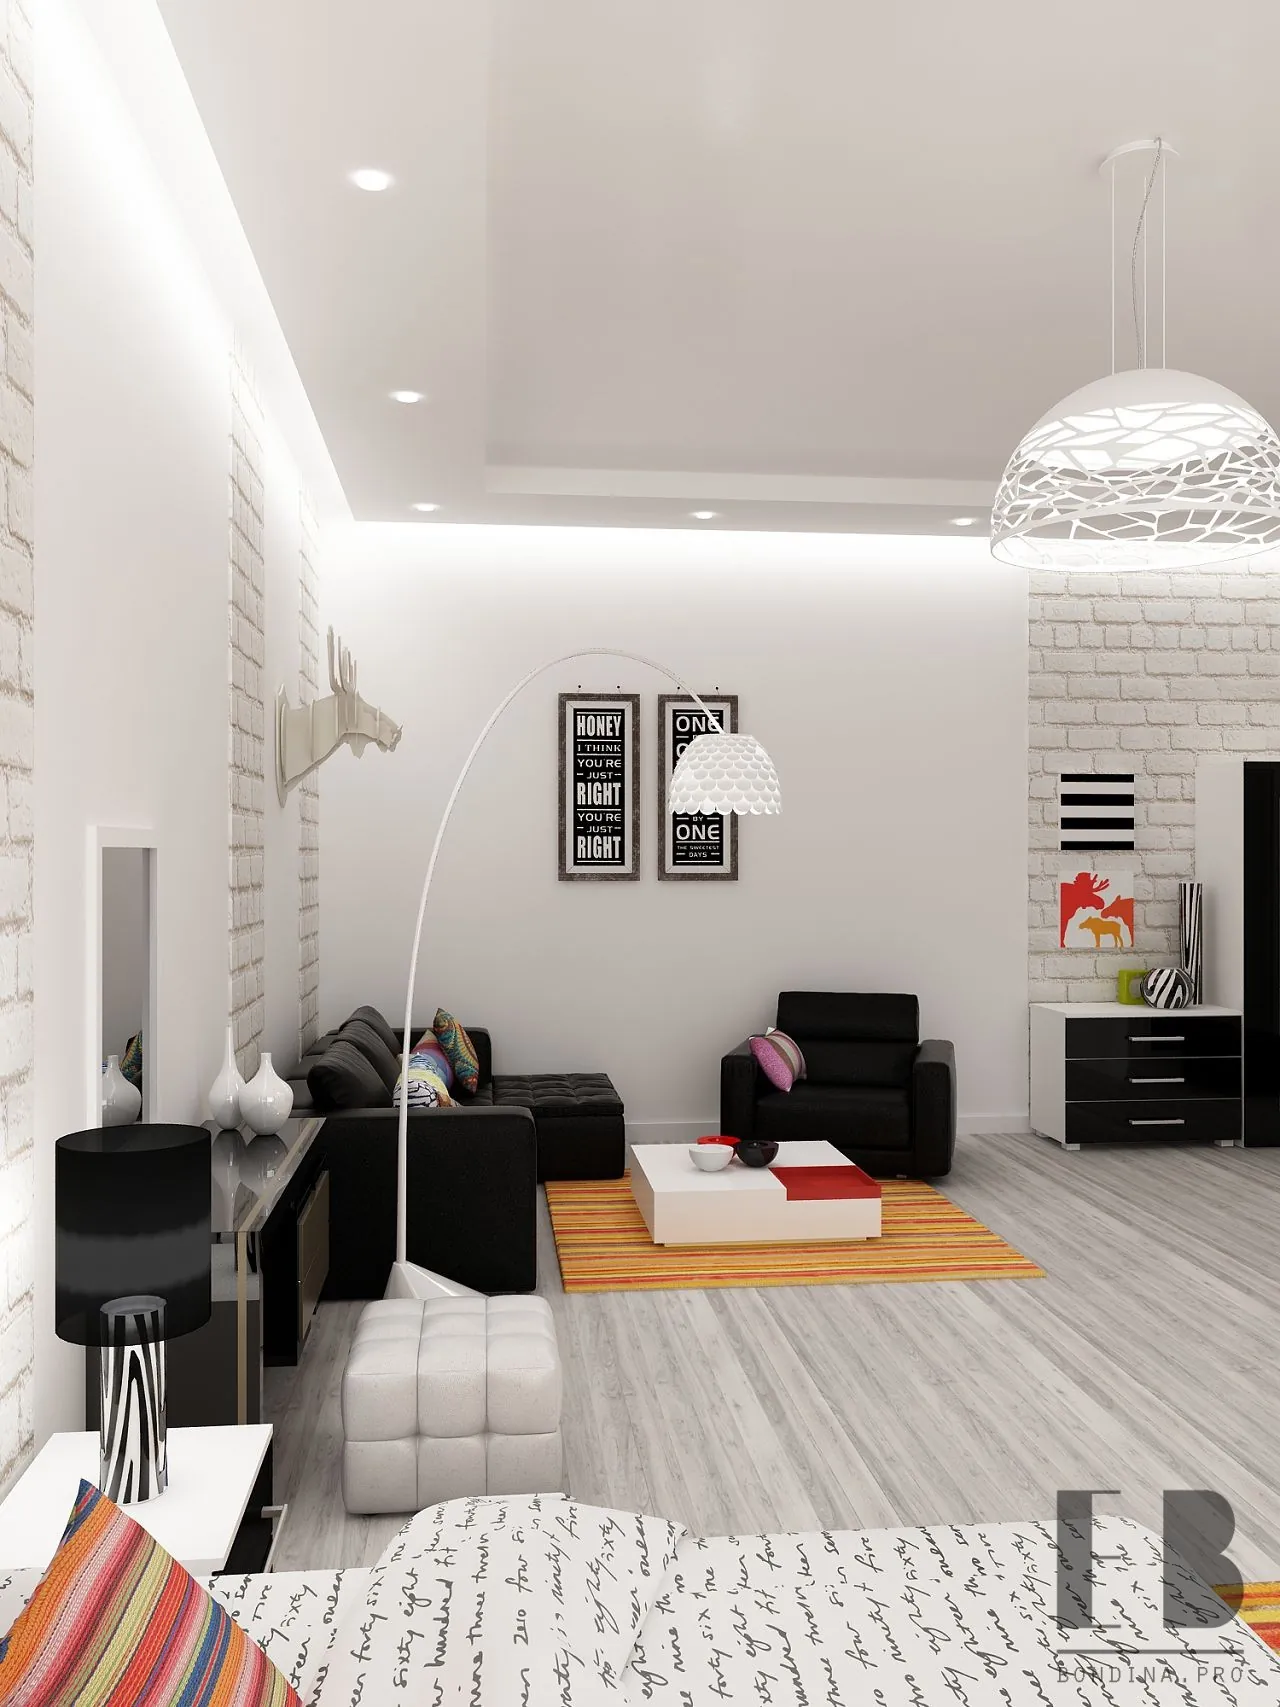 Tender interior design of living room bedroom combo